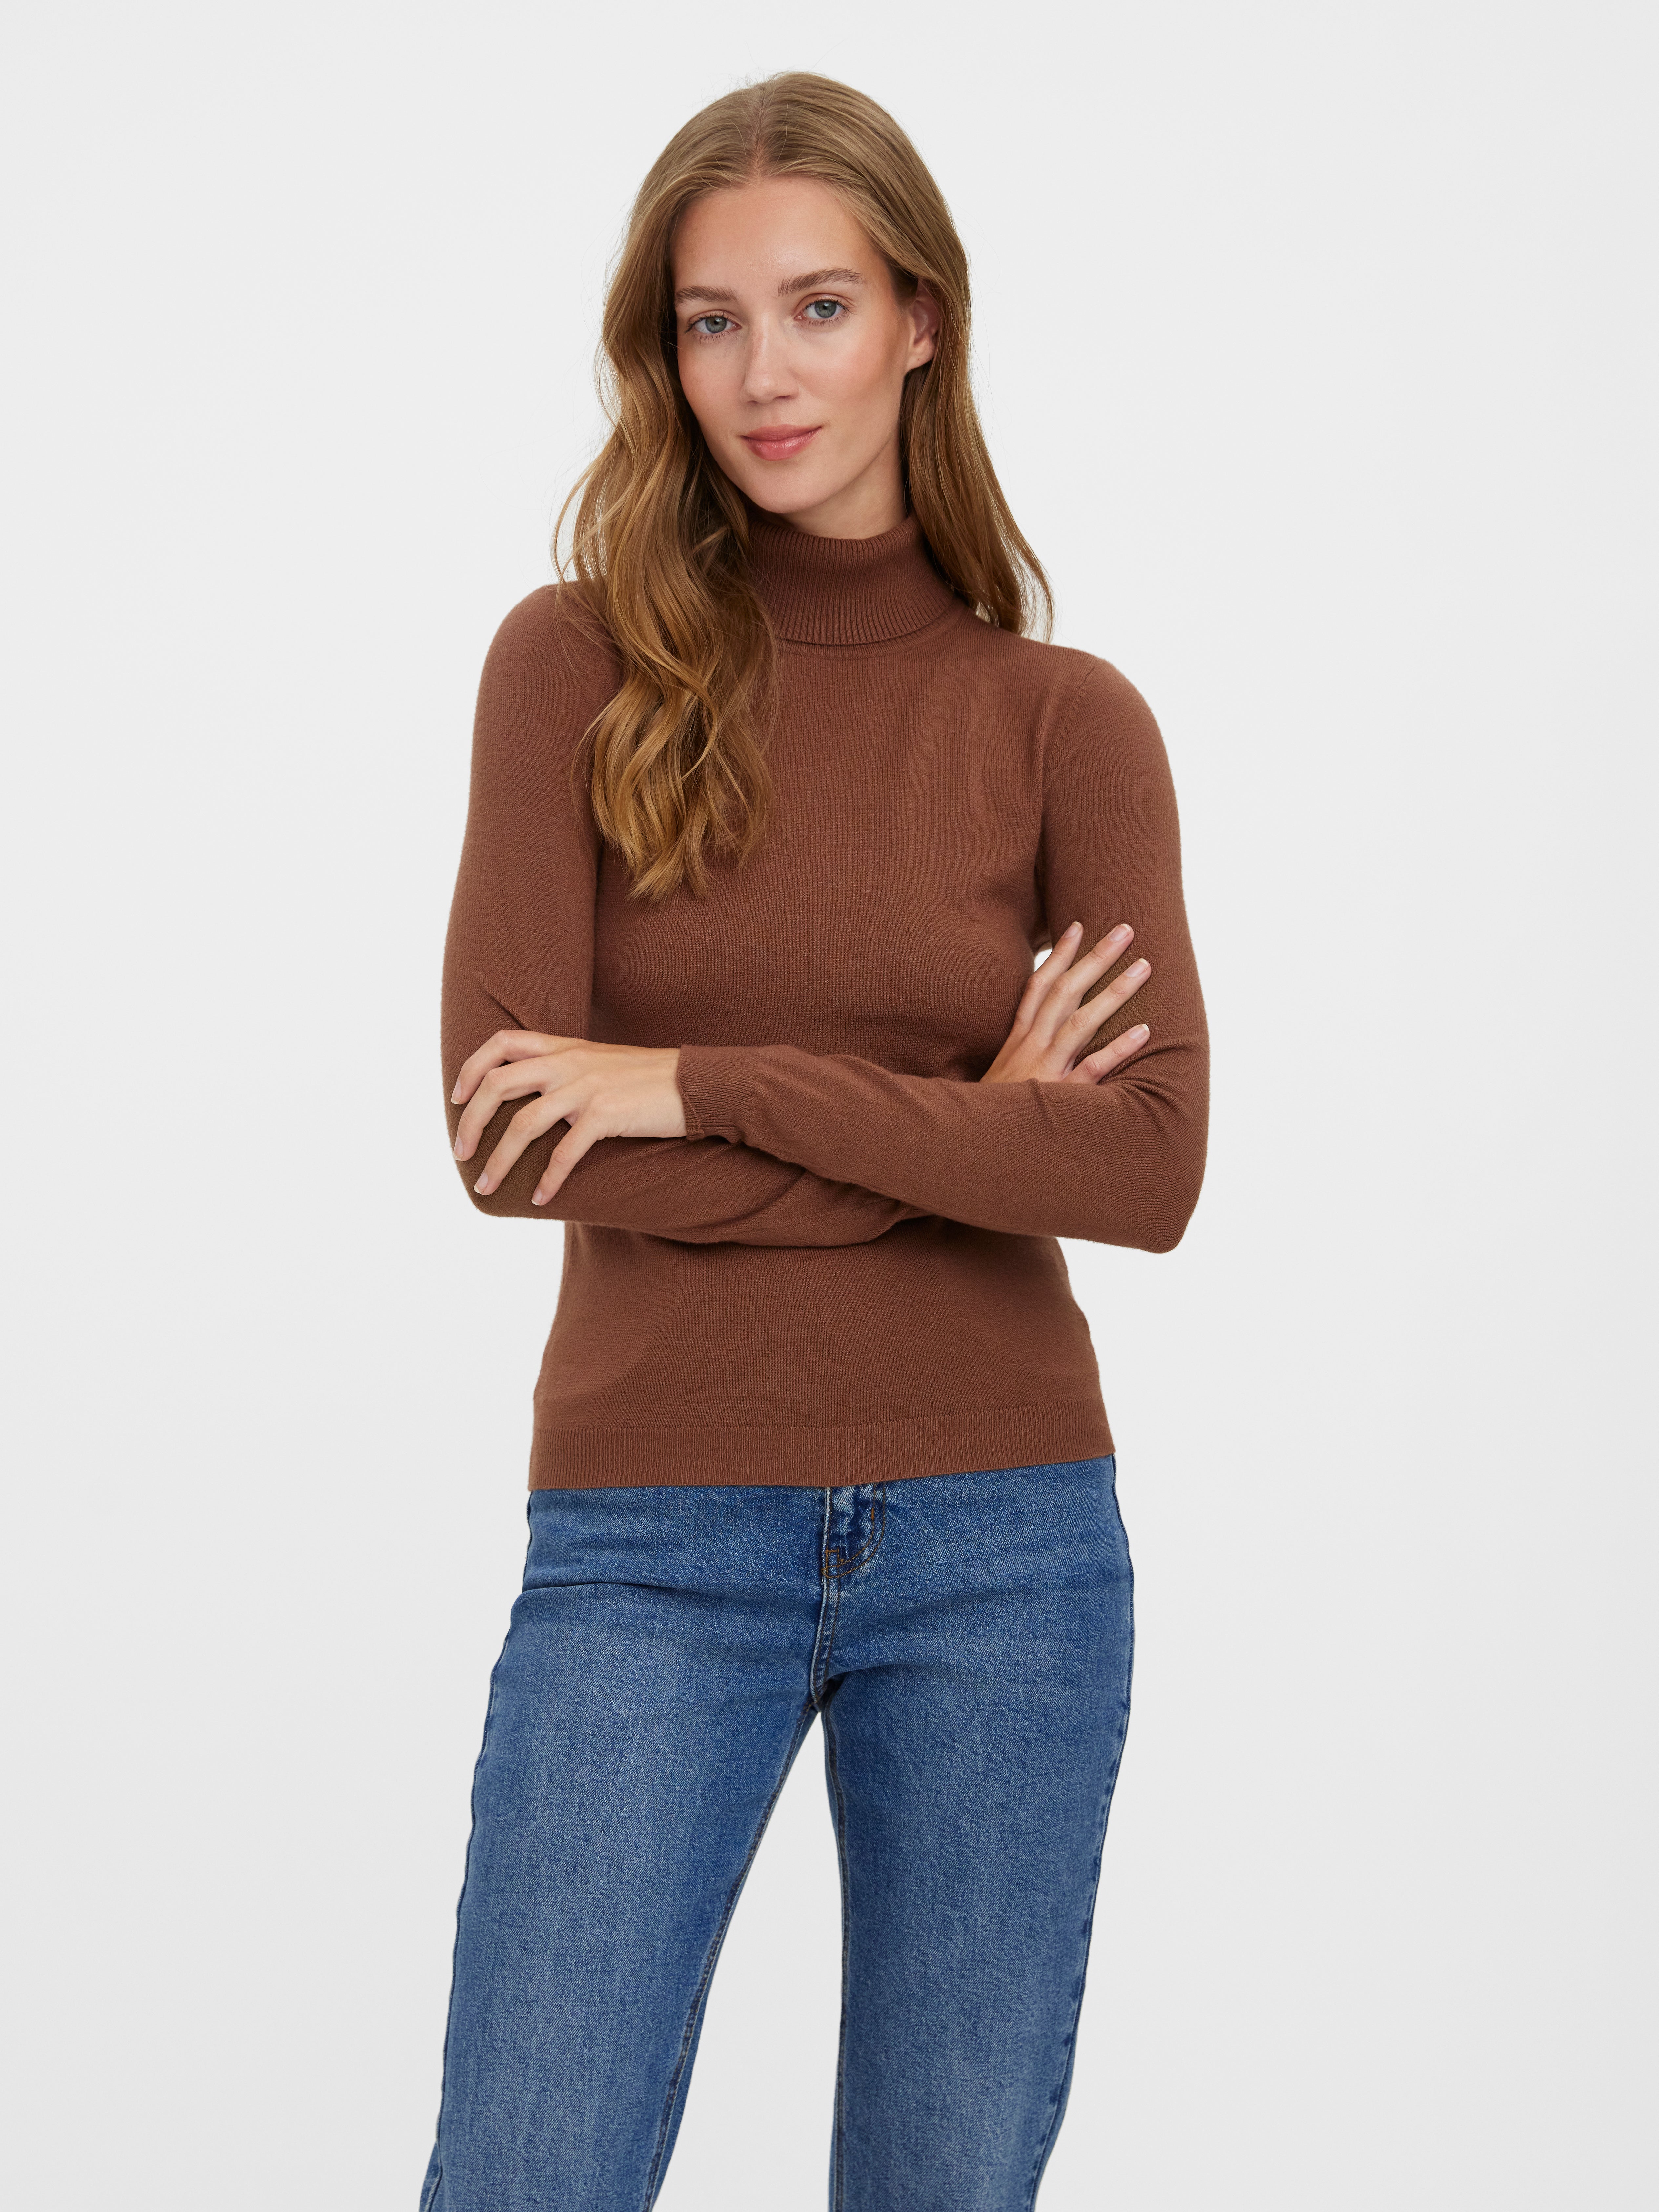 Rabatt 57 % DAMEN Pullovers & Sweatshirts Strickjacke Stricken Vero Moda Strickjacke Orange L 